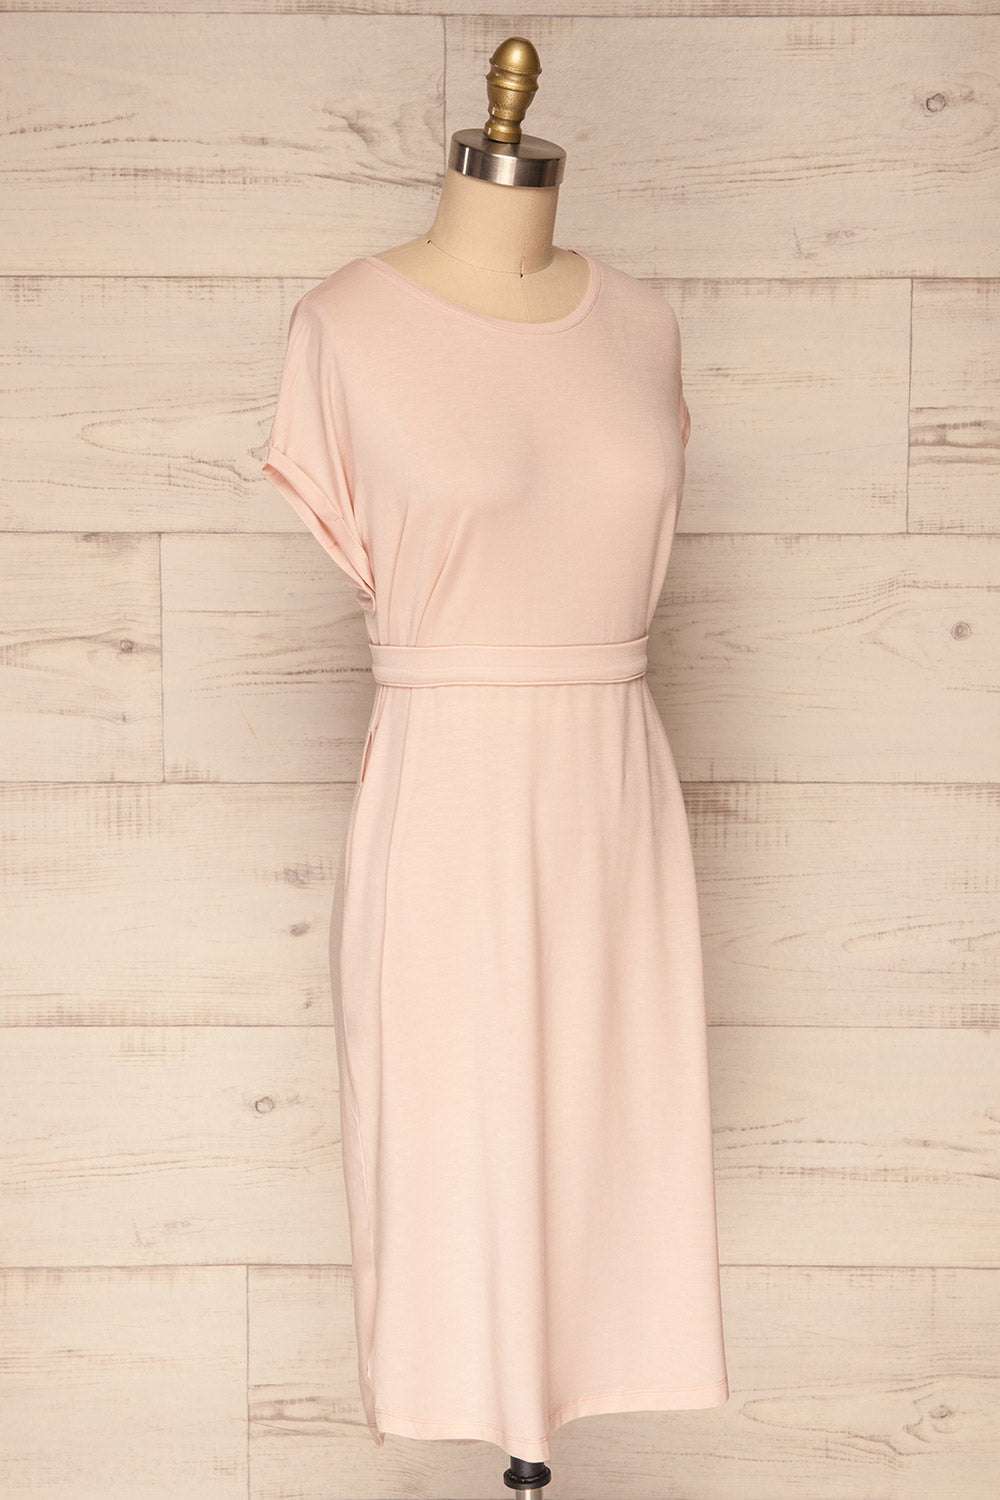 Halluin Blush Pink T-Shirt Dress with Belt | La Petite Garçonne